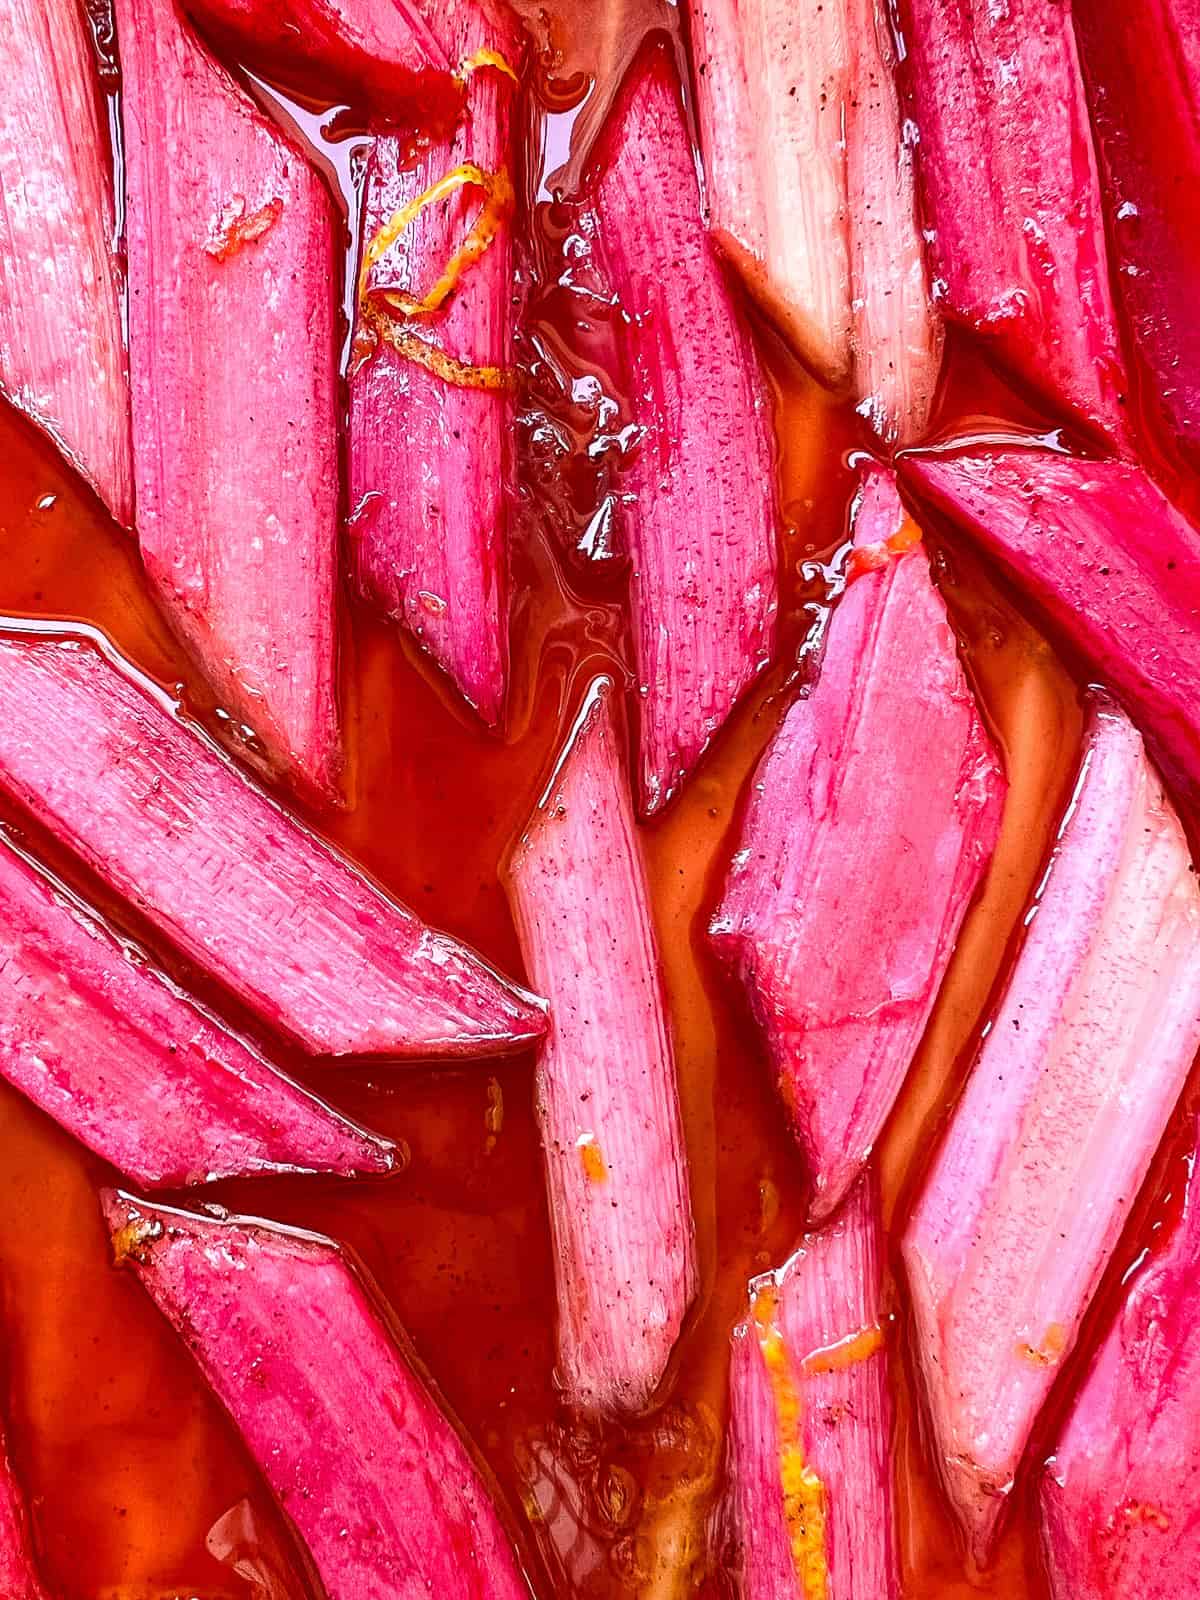 A close up image of roasted rhubarb.